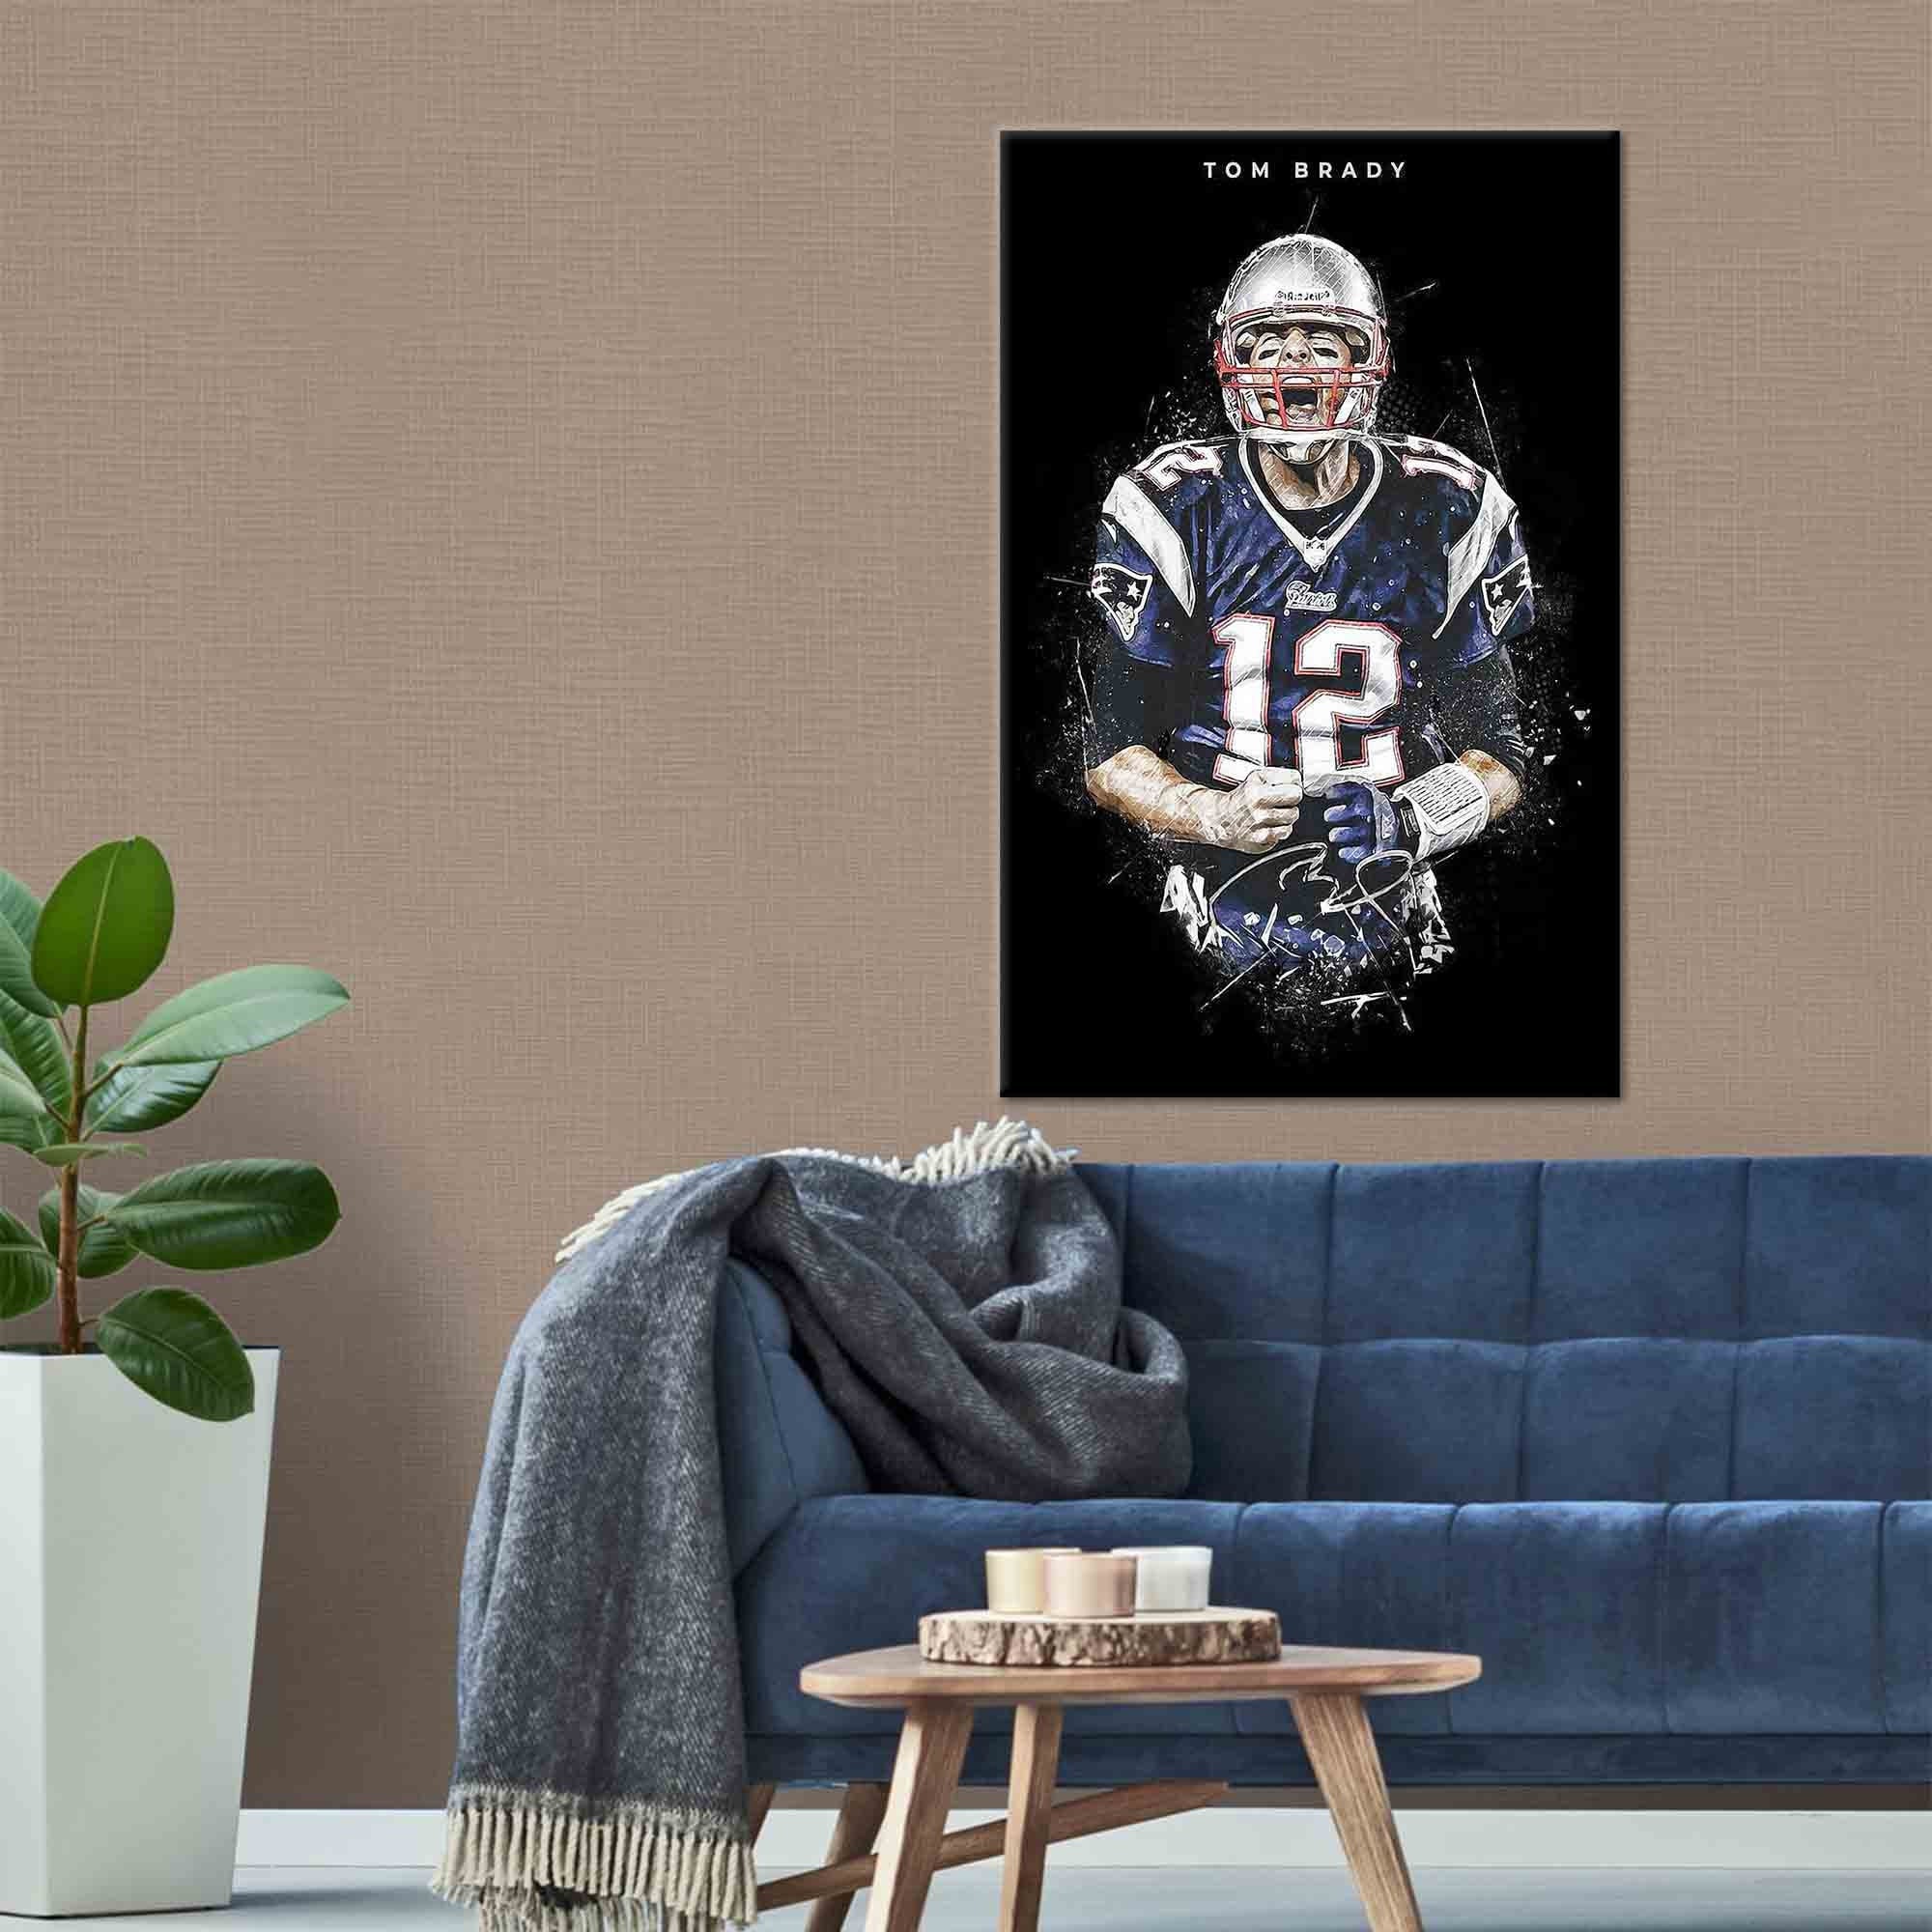 Tom Brady, Tom Brady Poster, Tom Brady Wall Art, Tom Brady Poster